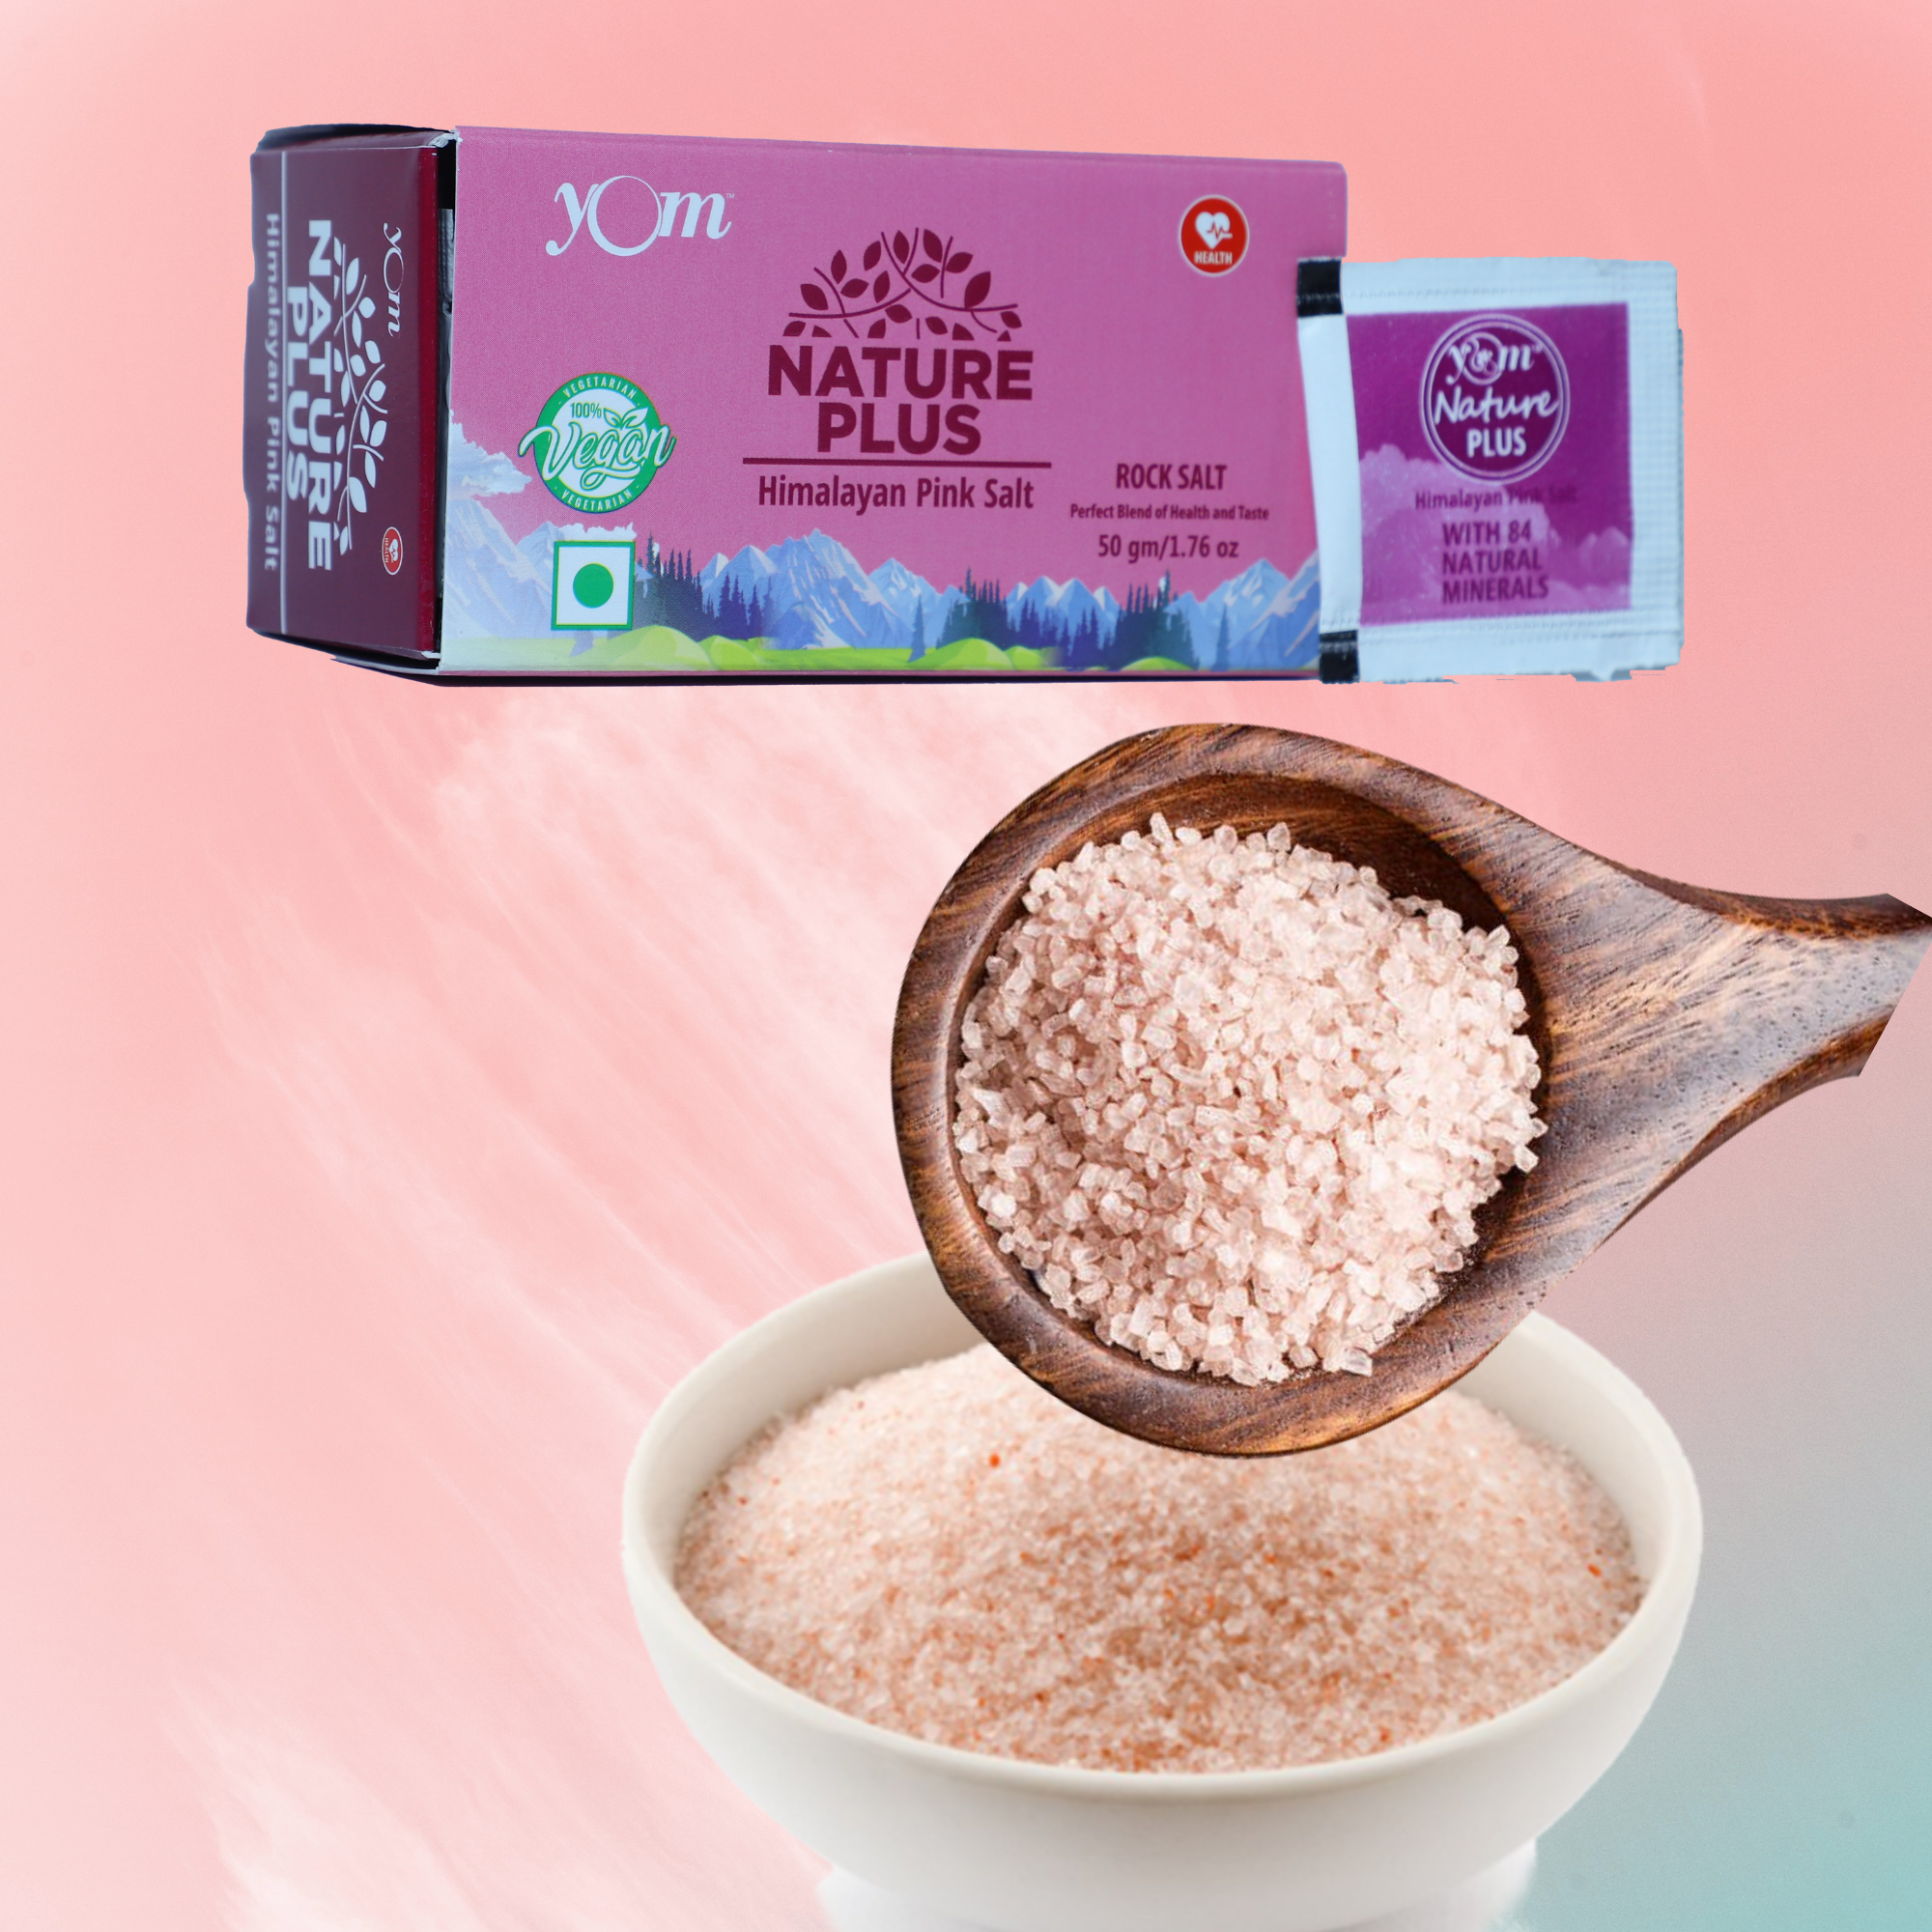 YOM Nature Plus Himalayan Pink Rock Salt (Travelling Pouch Box) - 50 Nos * 1 Gm